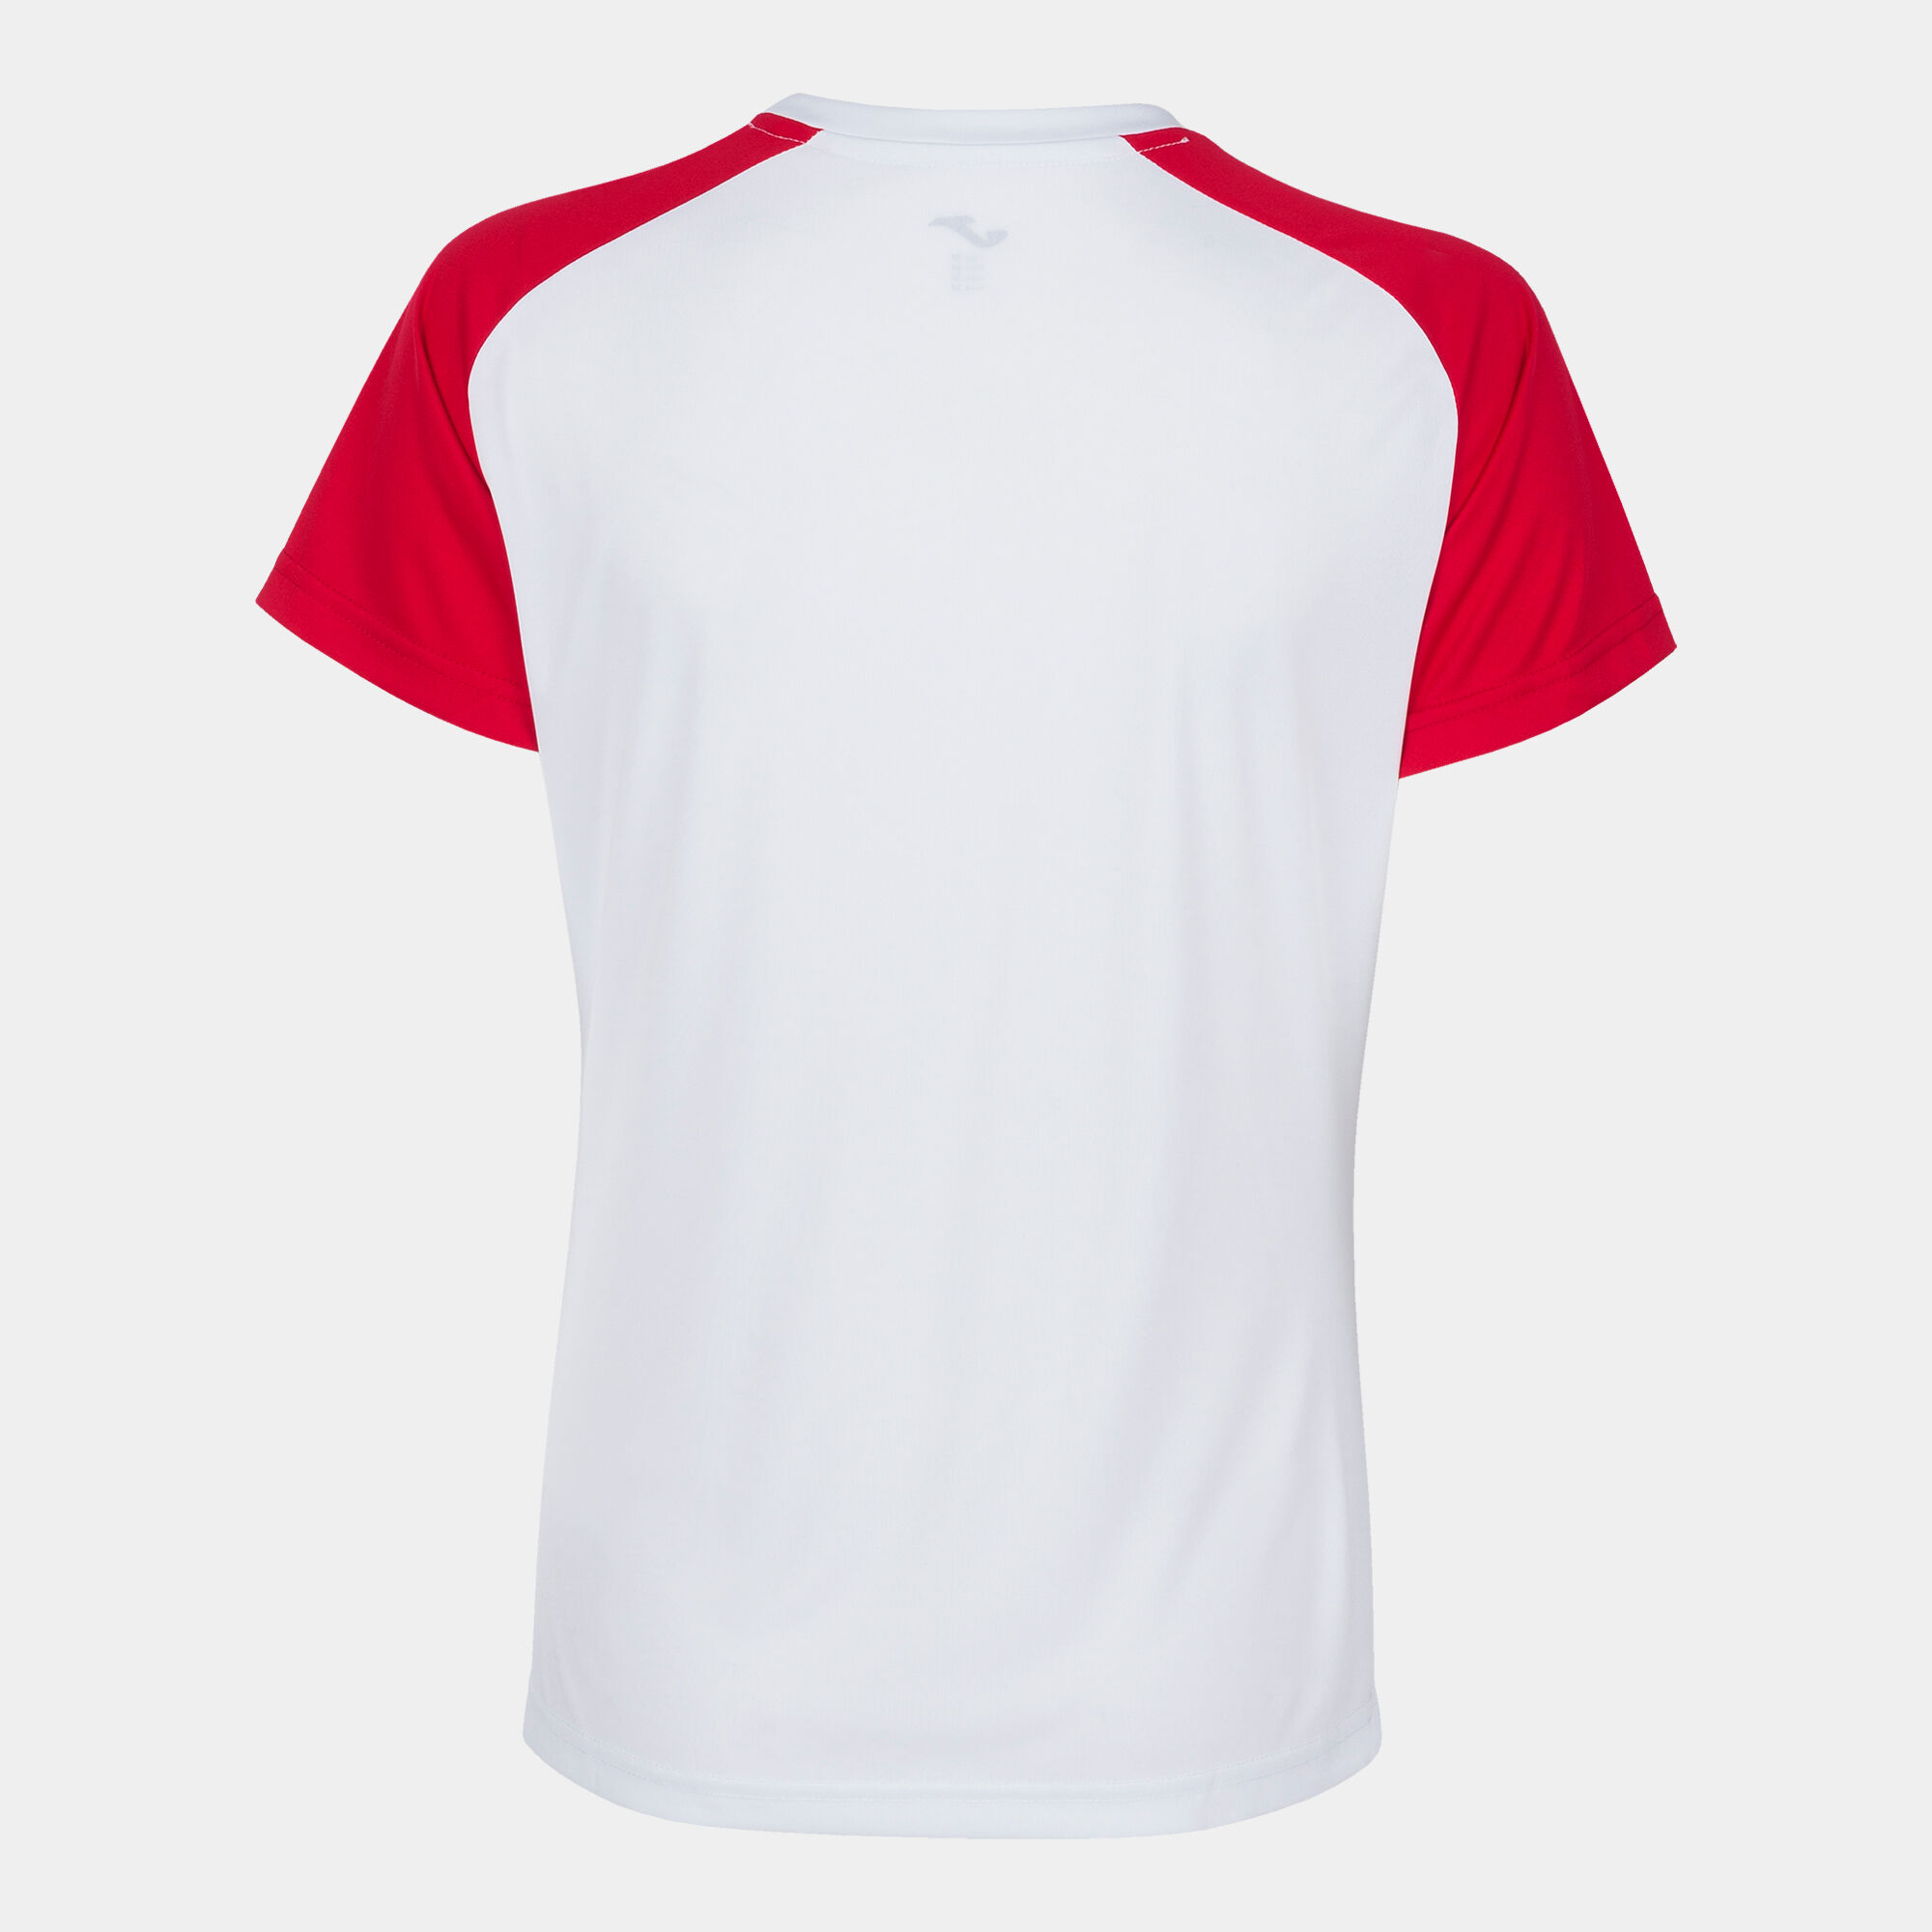 Camiseta Givova IACC 1918 Hombre Rojo/Blanco